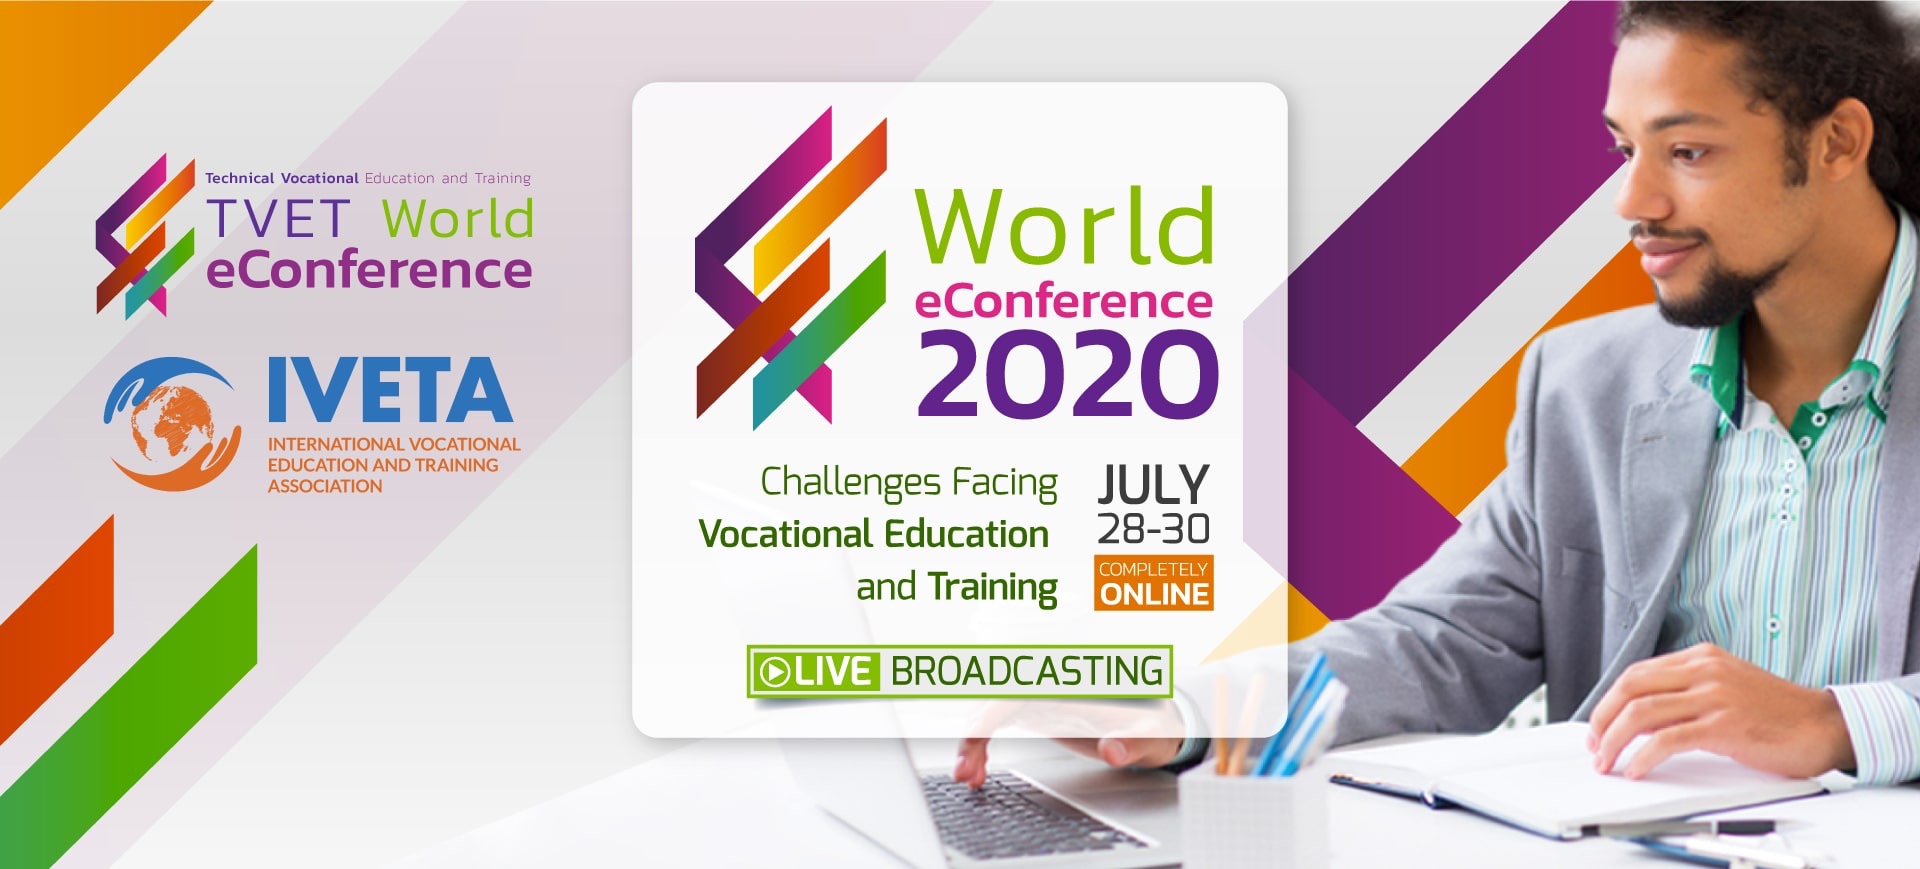 TVET World Conference 2020